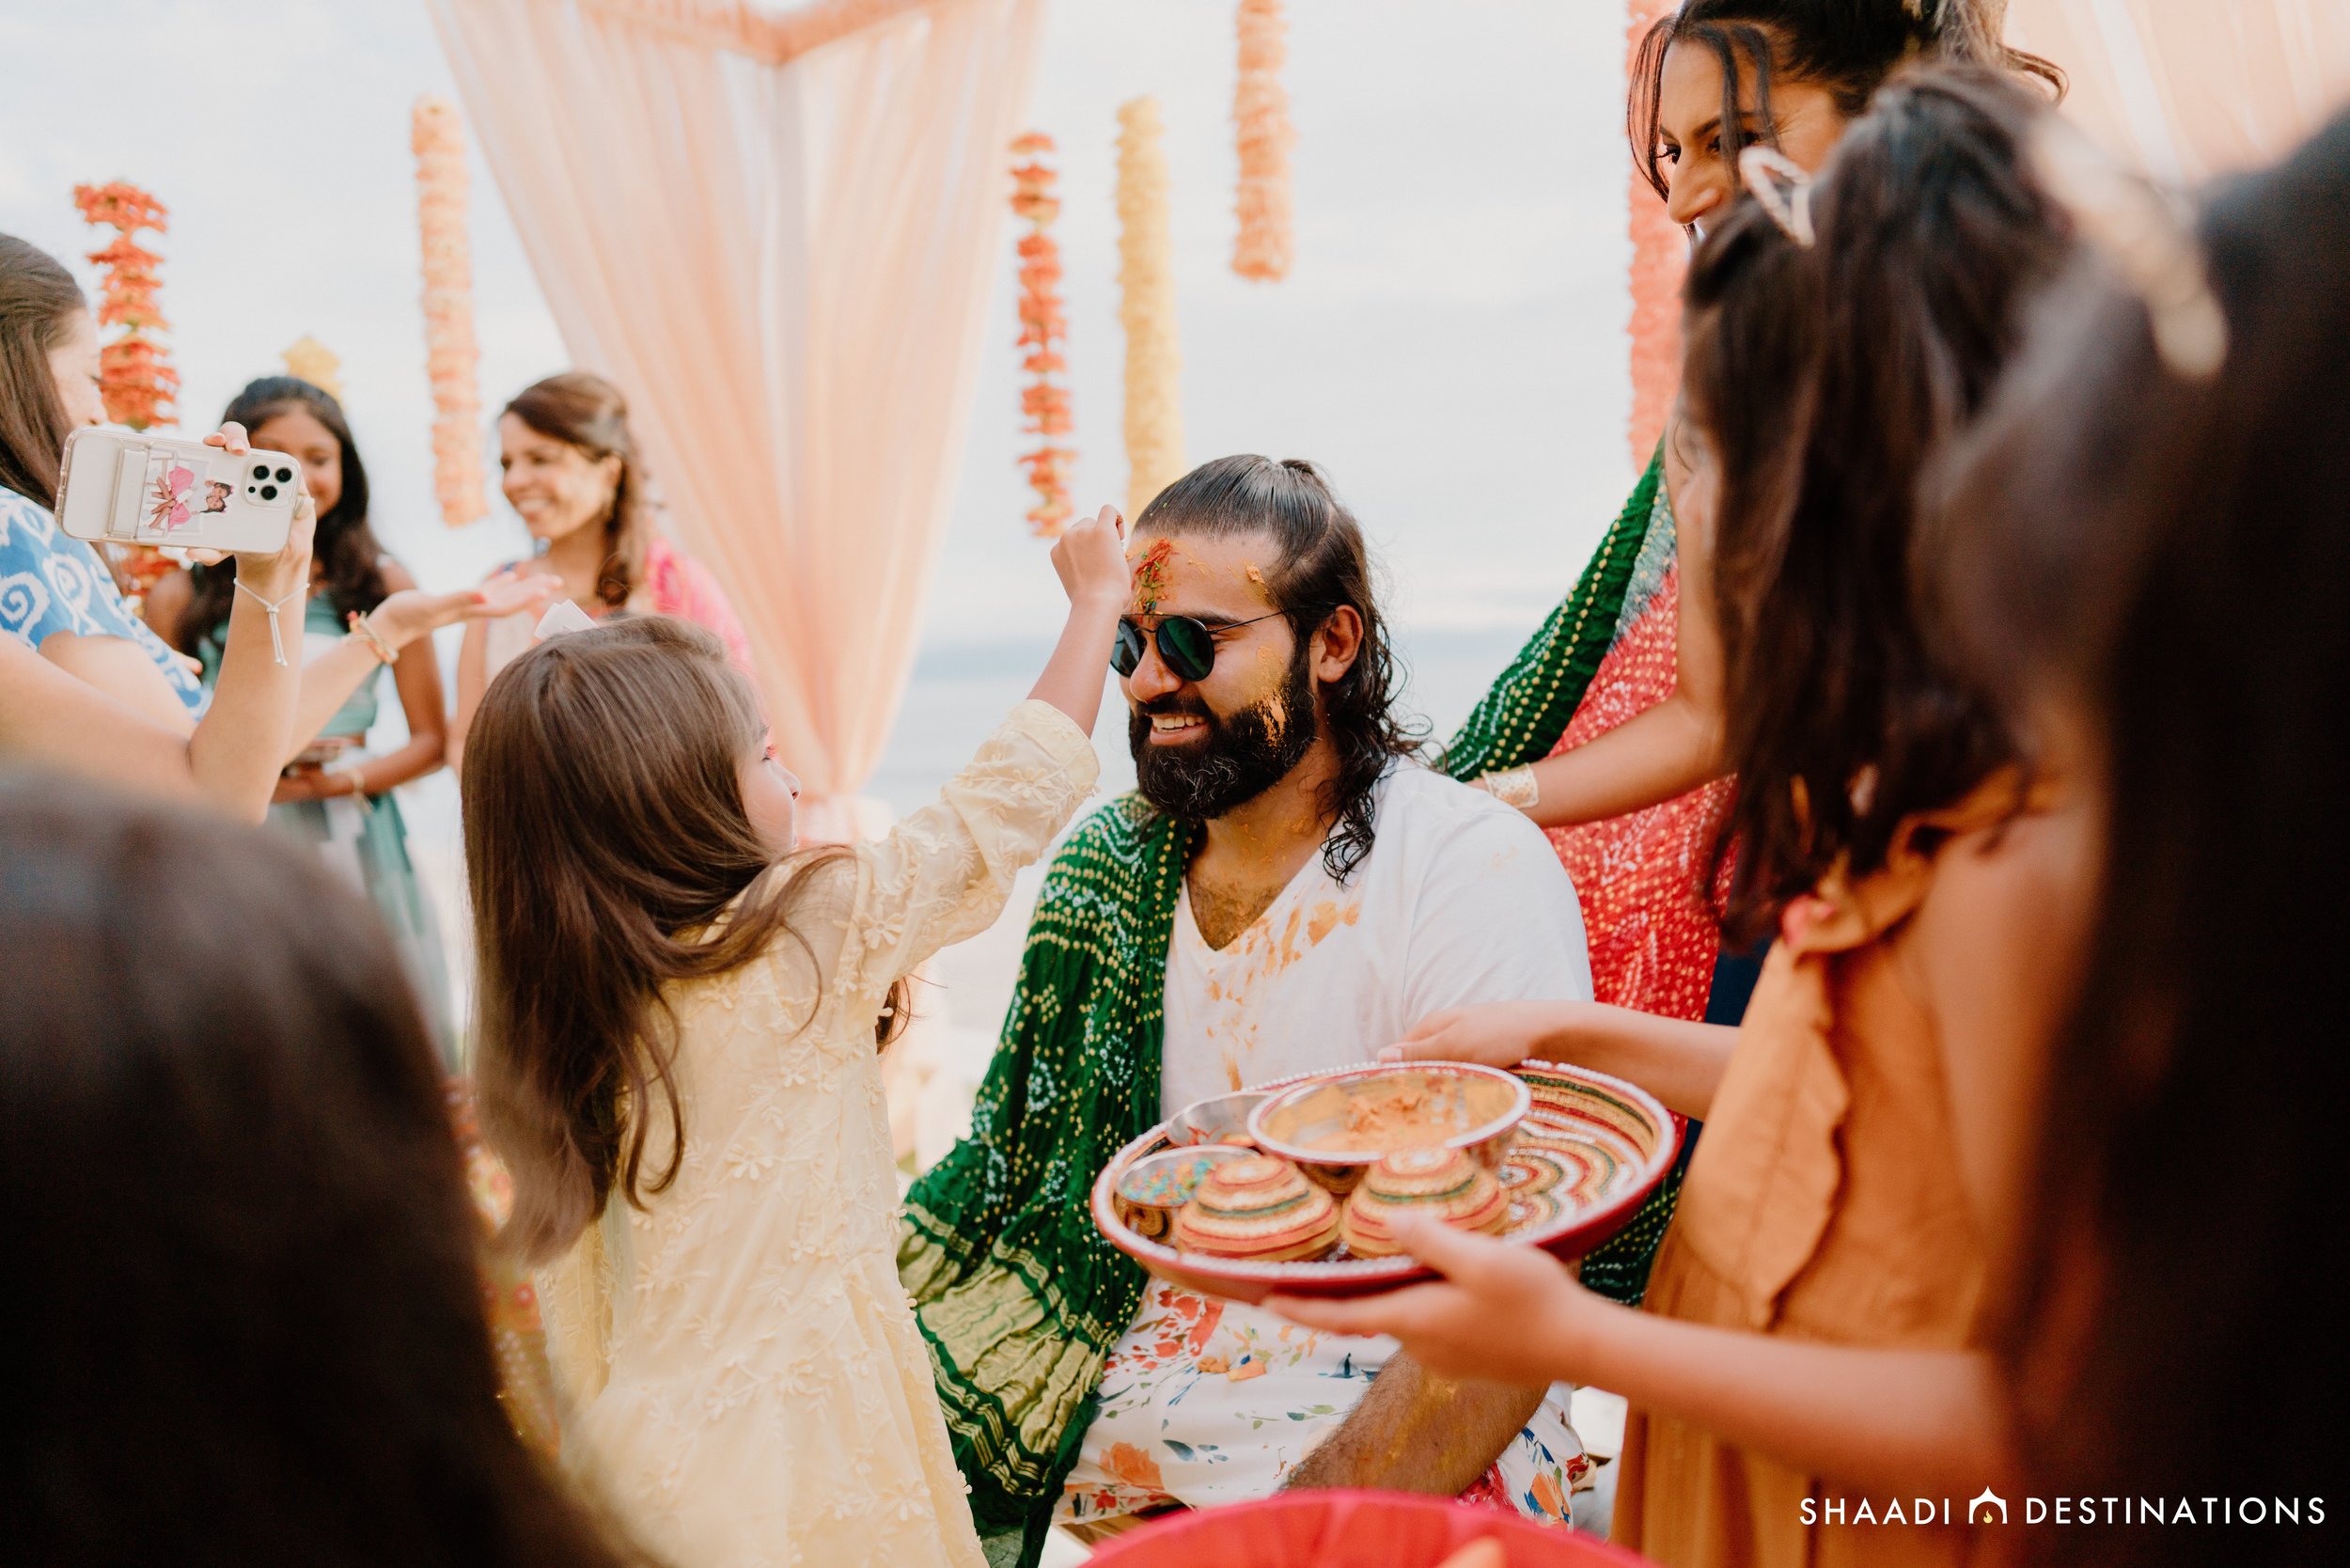 Indian Destination Wedding - Saarah + Sunil - Grand Velas Riviera Nayarit - 93.jpg